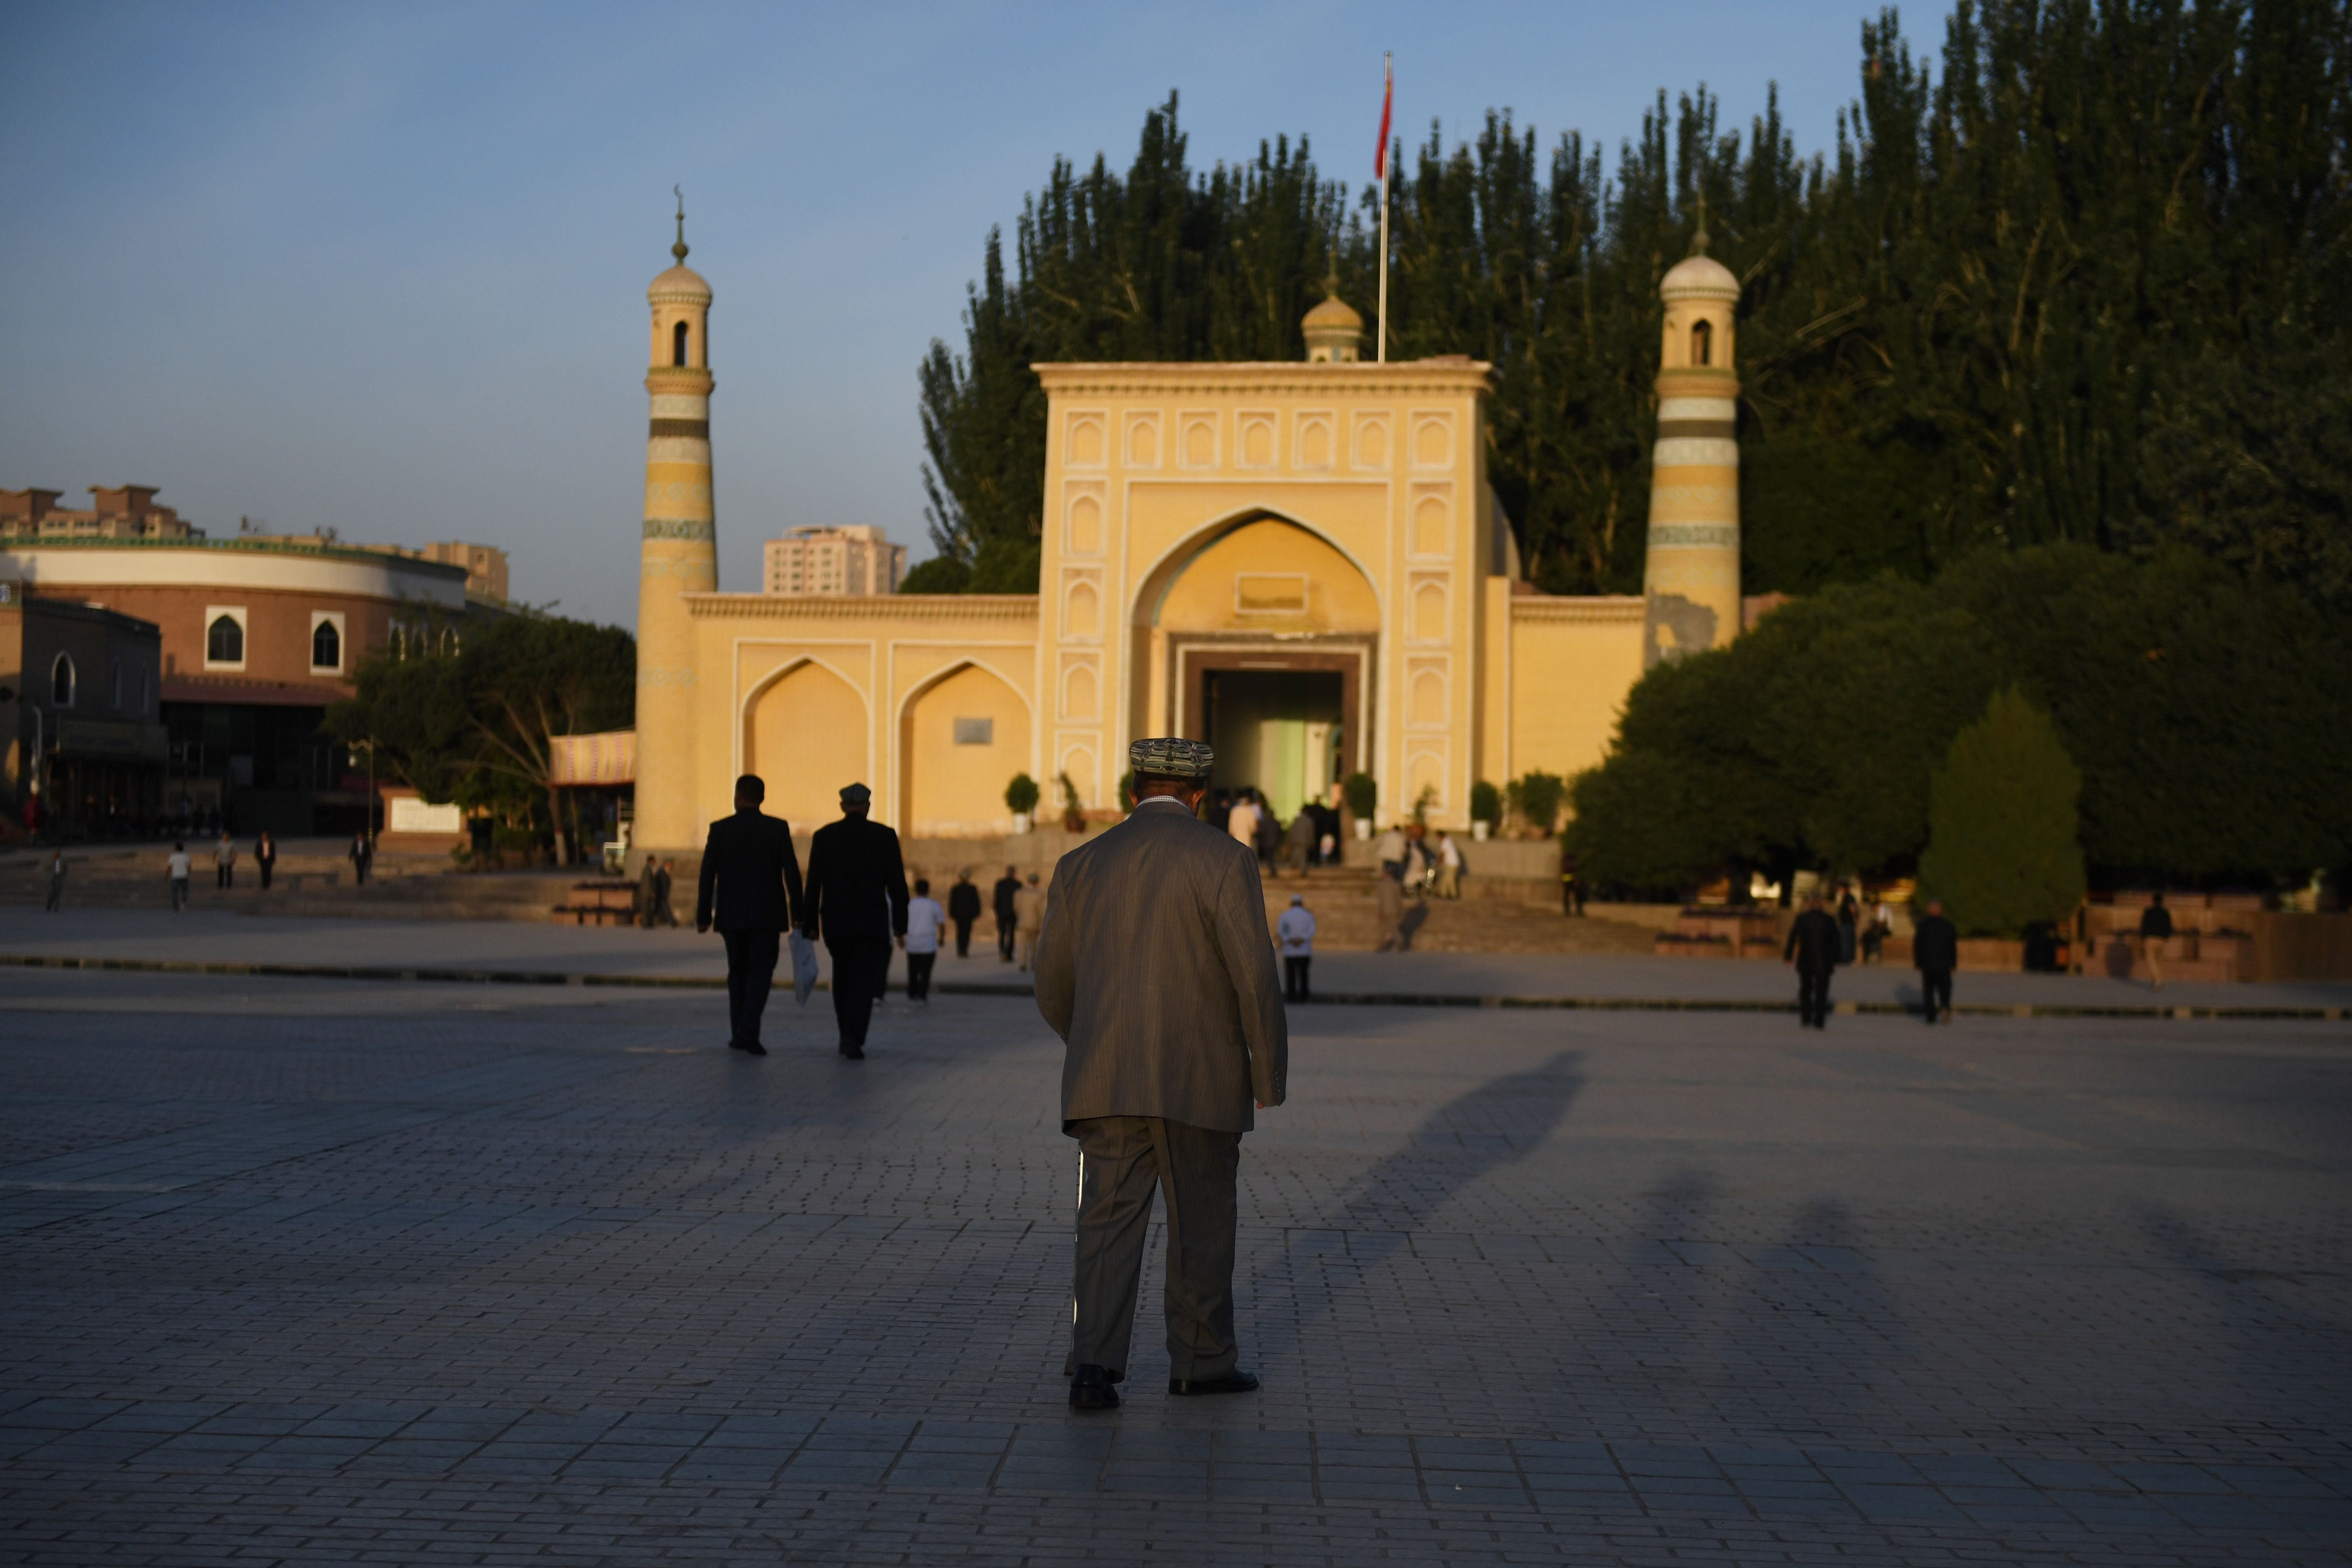 A Uighur walks towards the Id Kah mosque in China’s western Xinjiang region